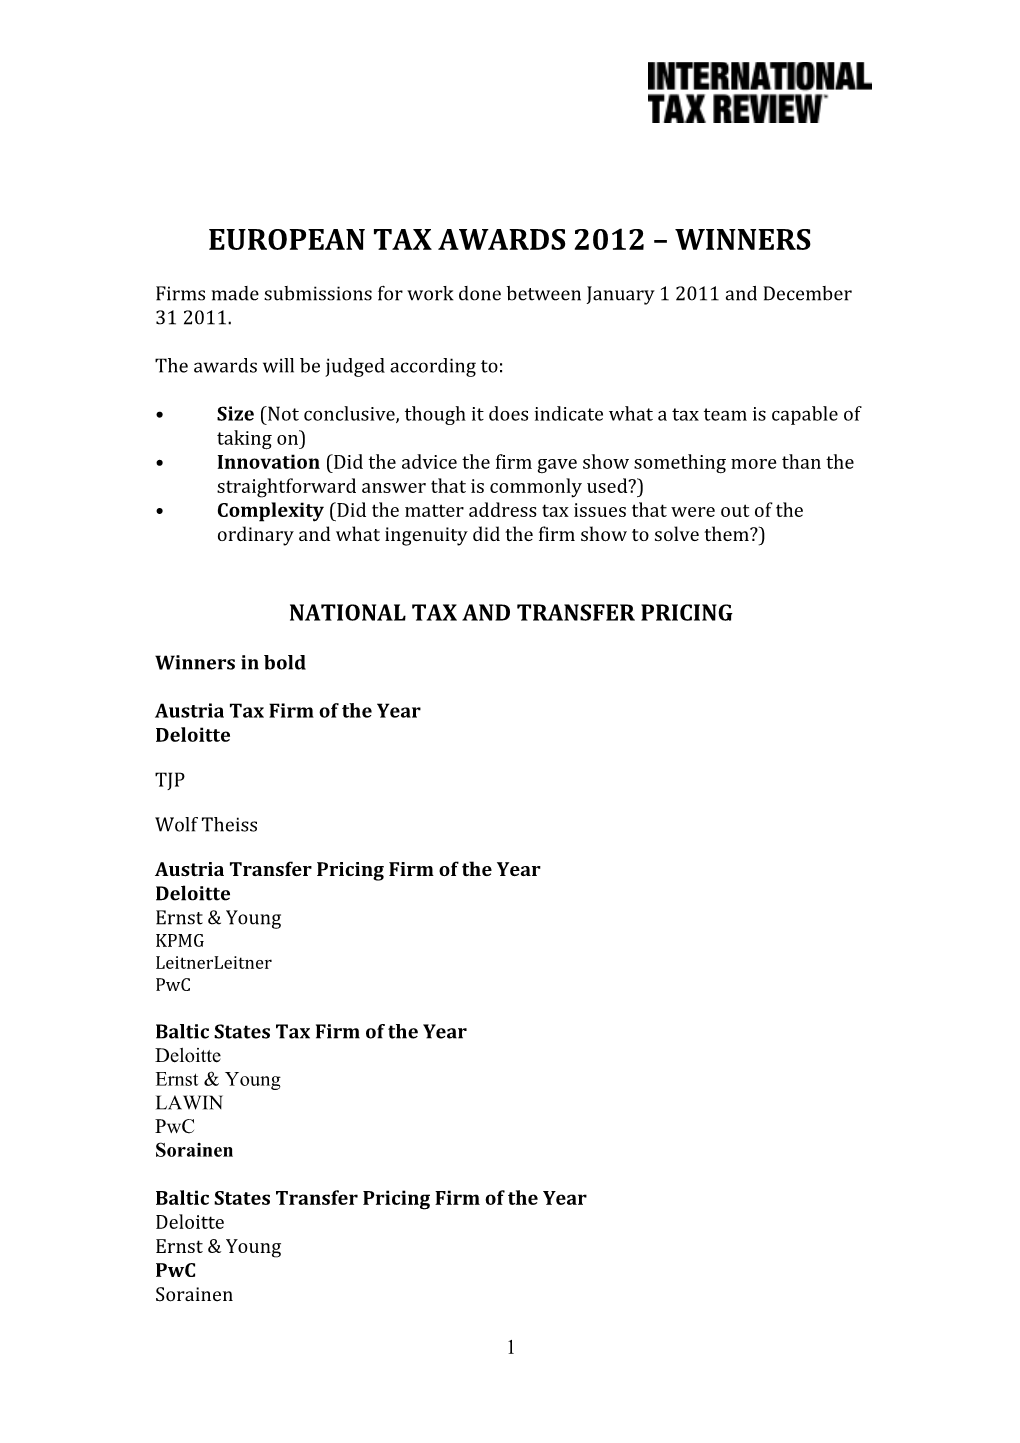 European Tax Awards 2008 Shortlists